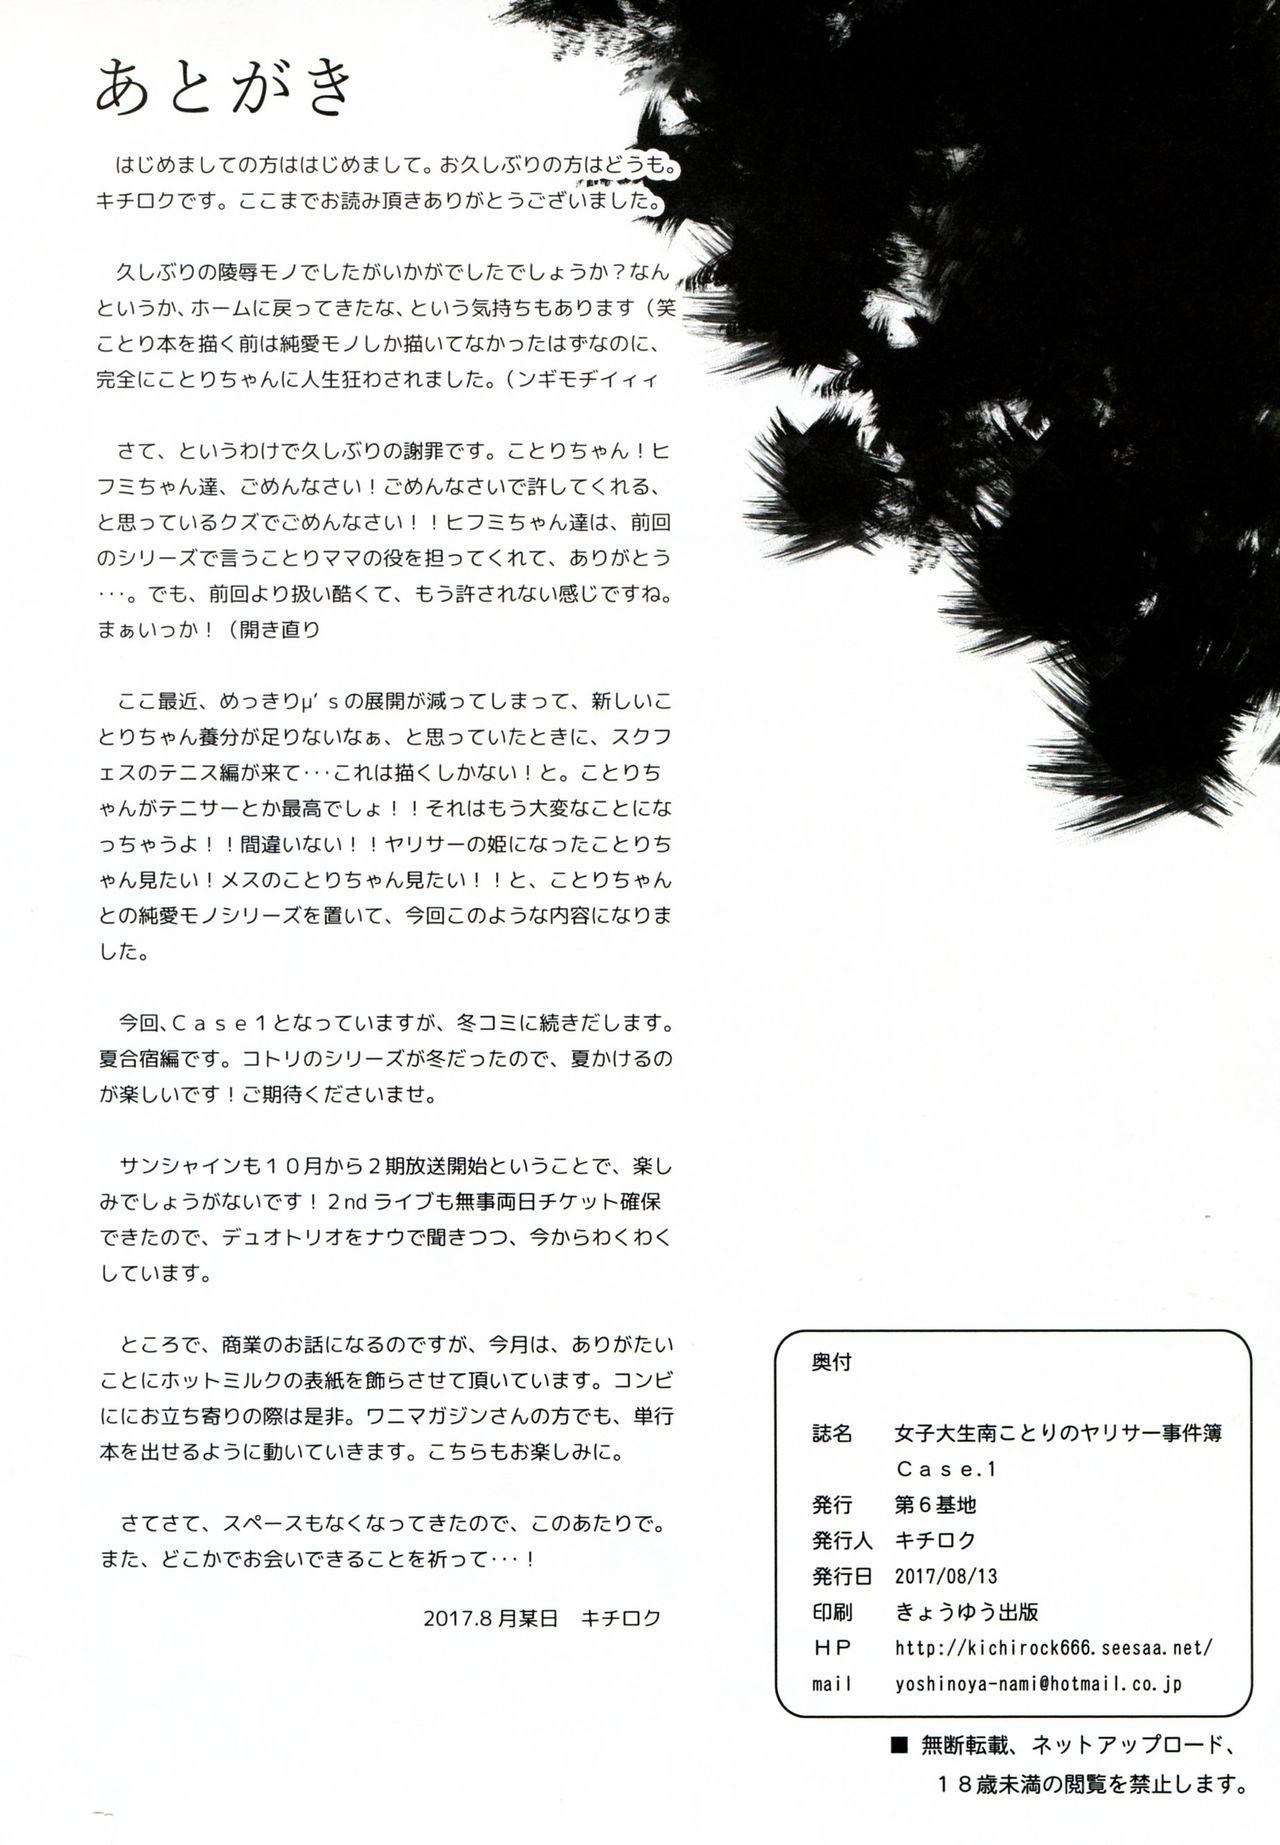 Joshidaisei Minami Kotori no YariCir Jikenbo Case. 1 | College Girl Kotori Minami's Hookup Circle Incident Record Book Case. 1 38